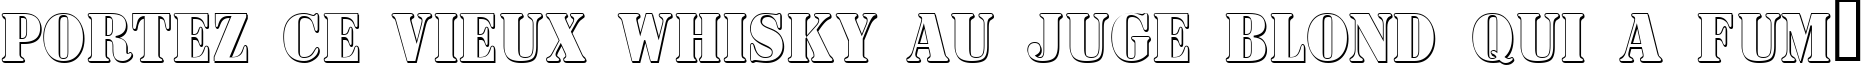 Пример написания шрифтом a_SignboardTitulNrSh текста на французском